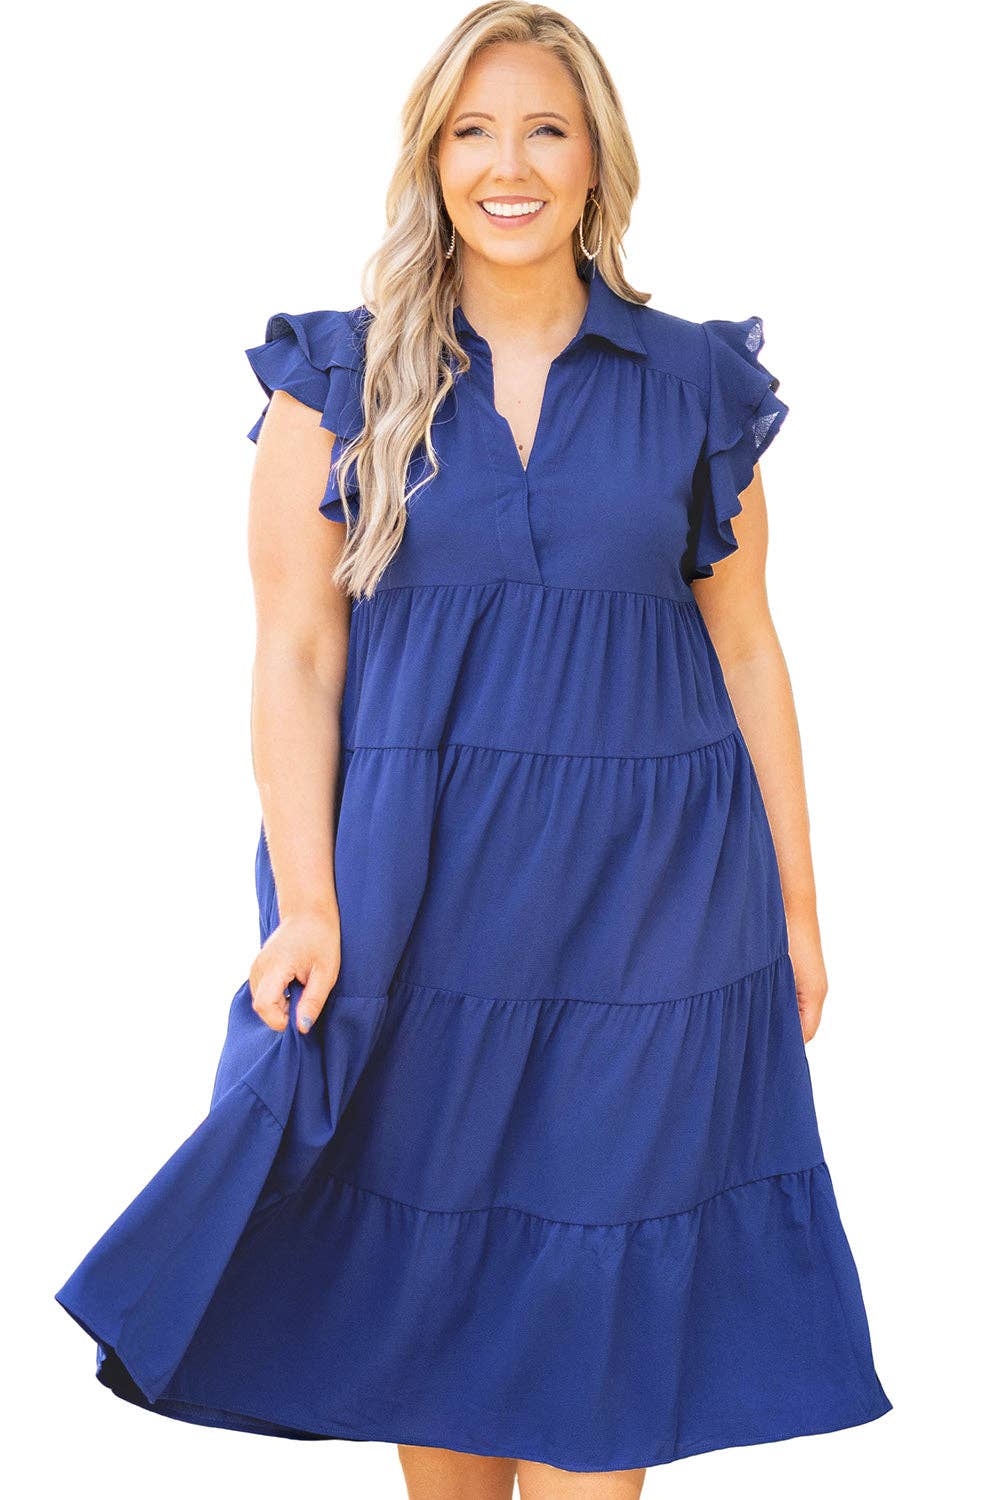 The Blue Beauty Dress